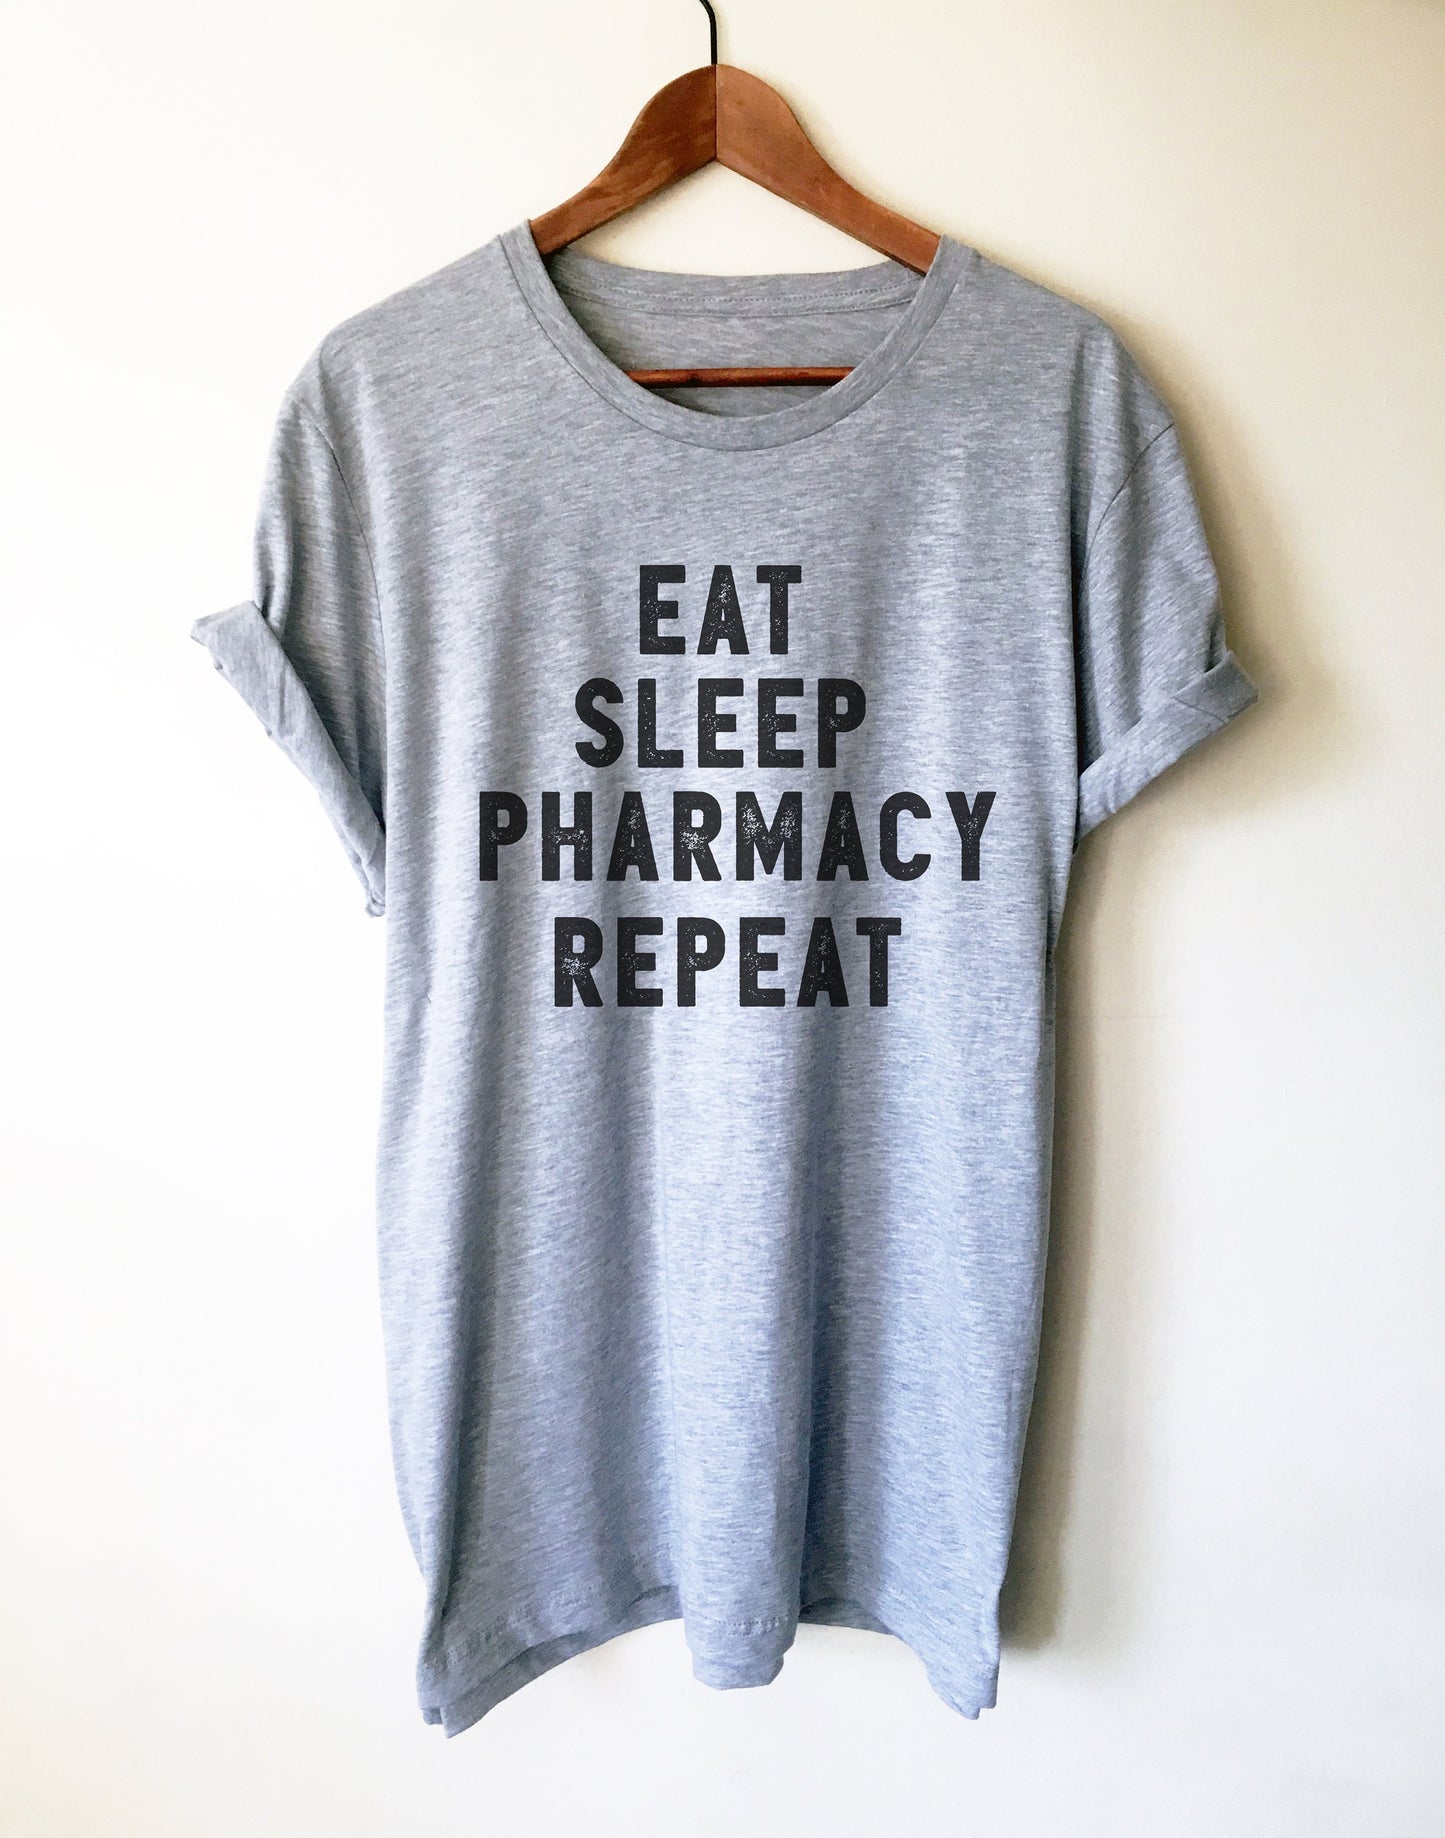 Eat Sleep Pharmacy Repeat Unisex Shirt - Pharmacist Shirt, Pharmacist Gift, Pharmacy Shirt, Pharmacist Assistant, Pharmacy School